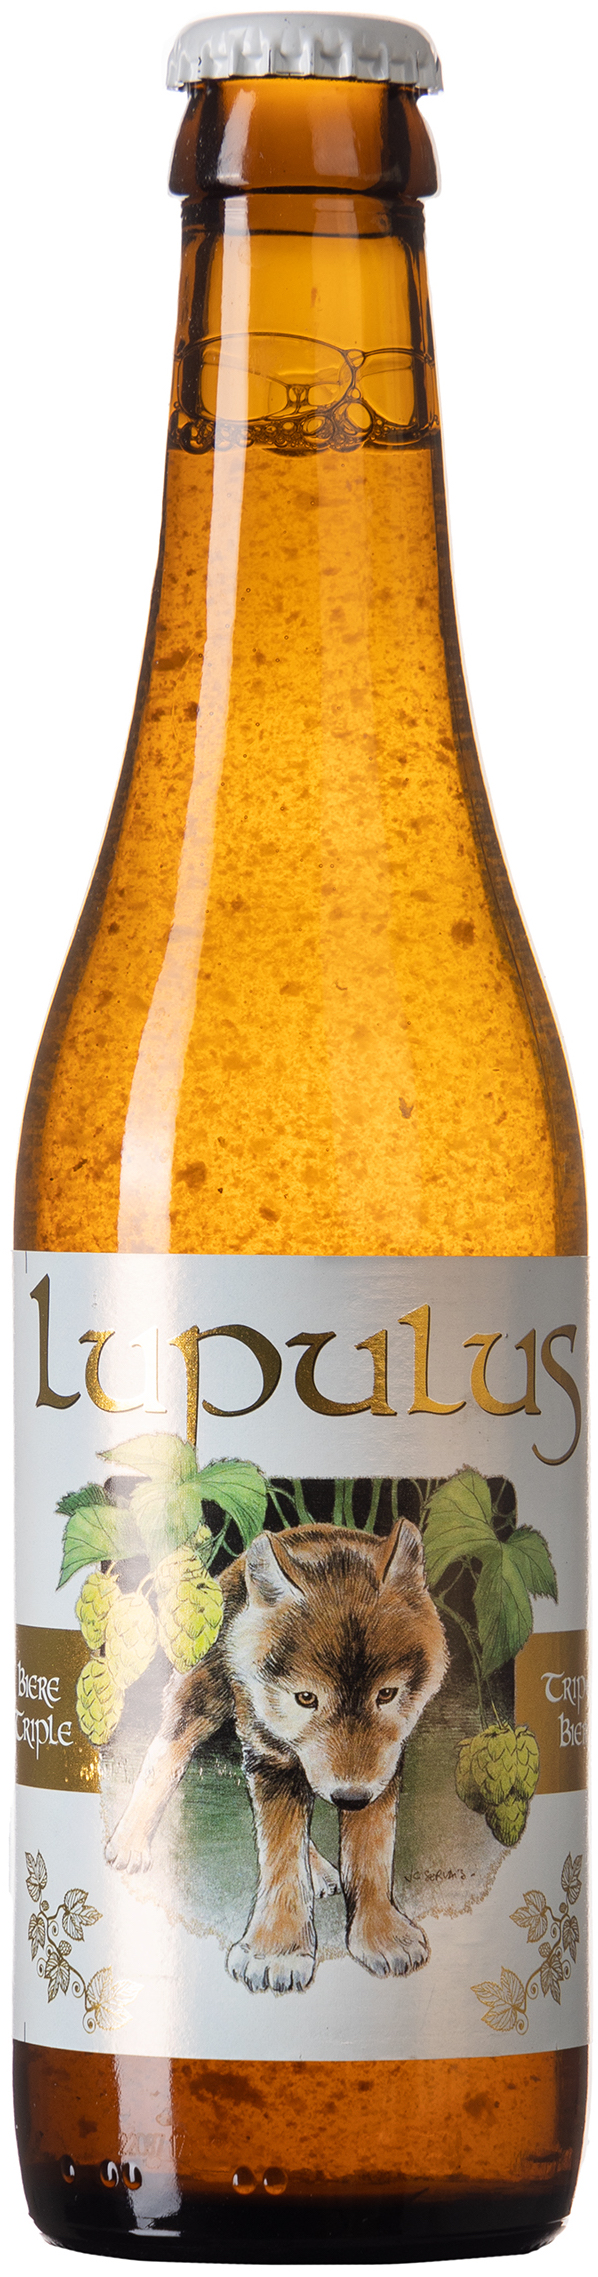 Lupulus Triple Blond 8,5% vol. 0,33L EINWEG 